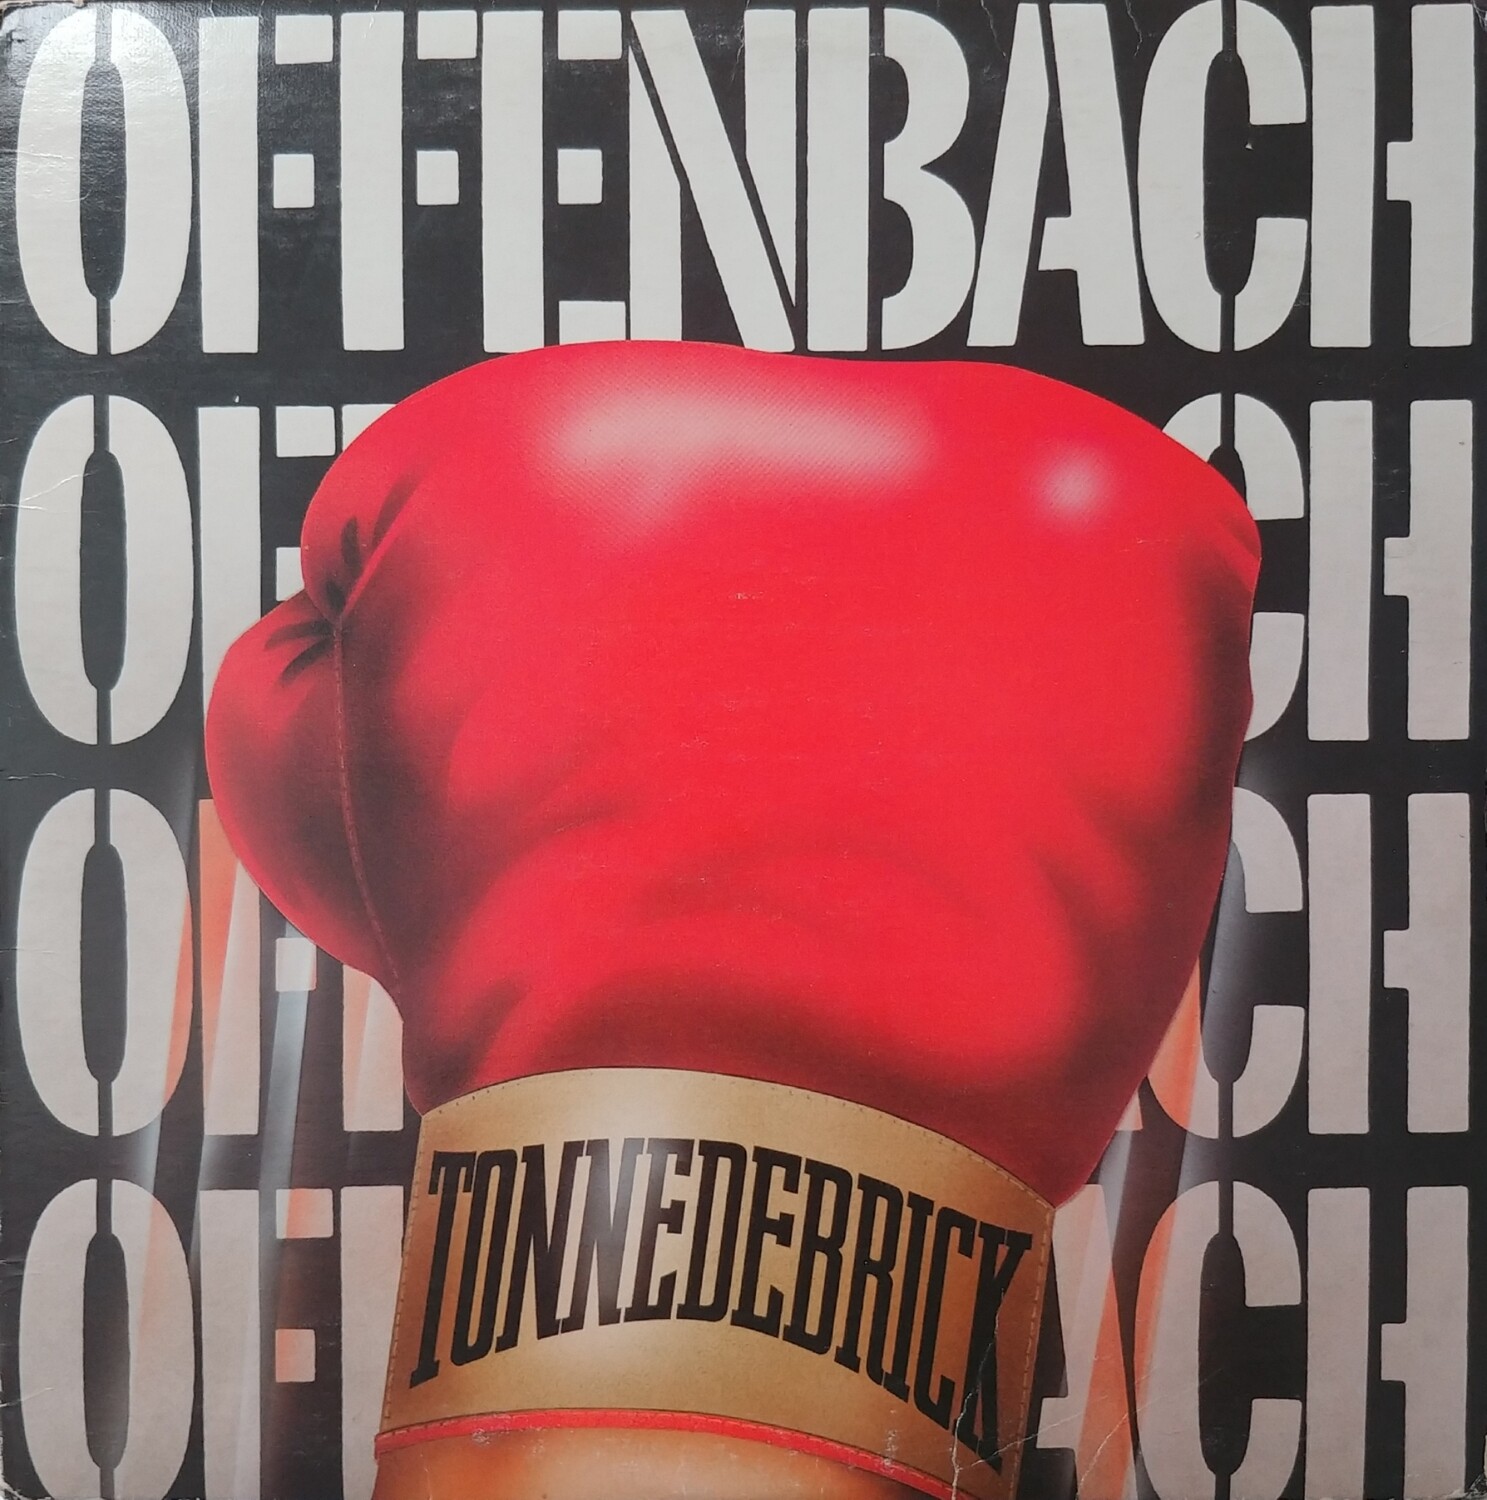 Offenbach - Tonnedebrick